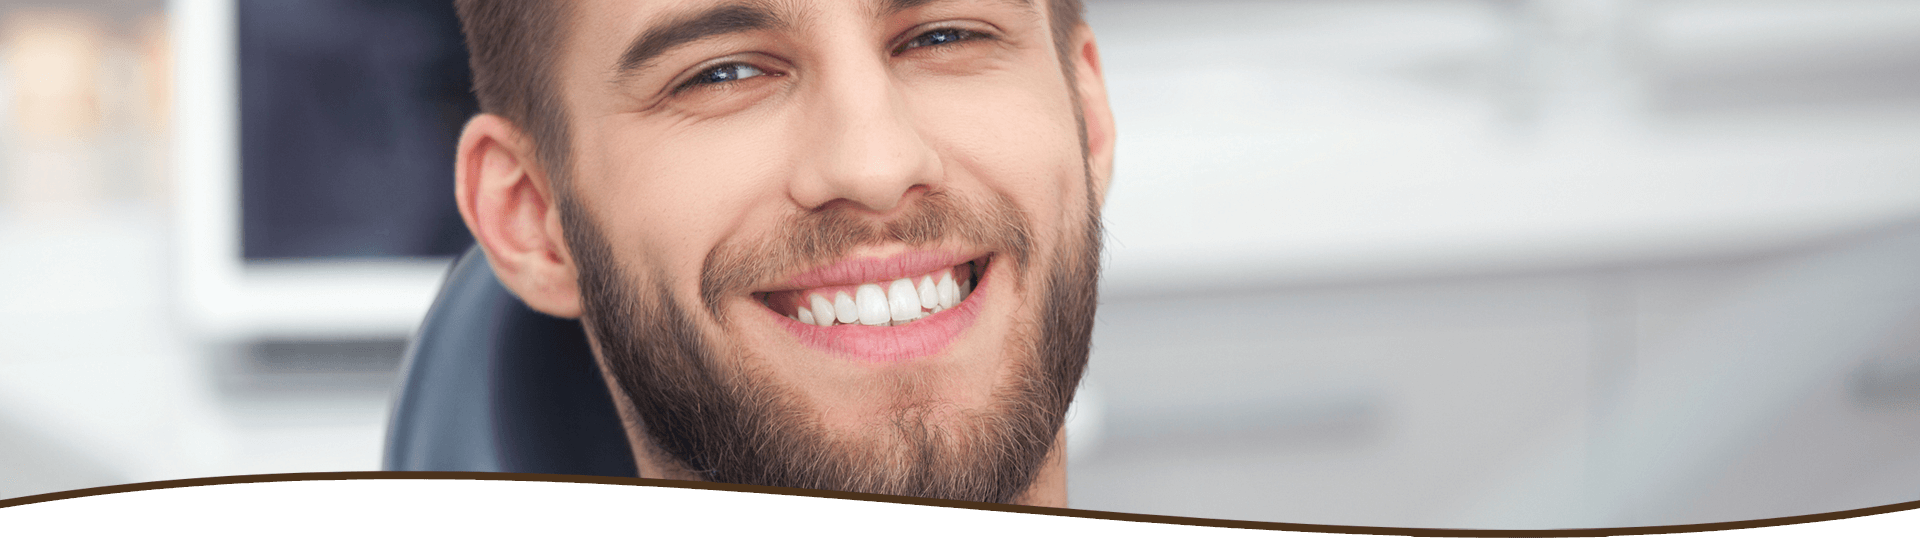 Smiling man at dental office